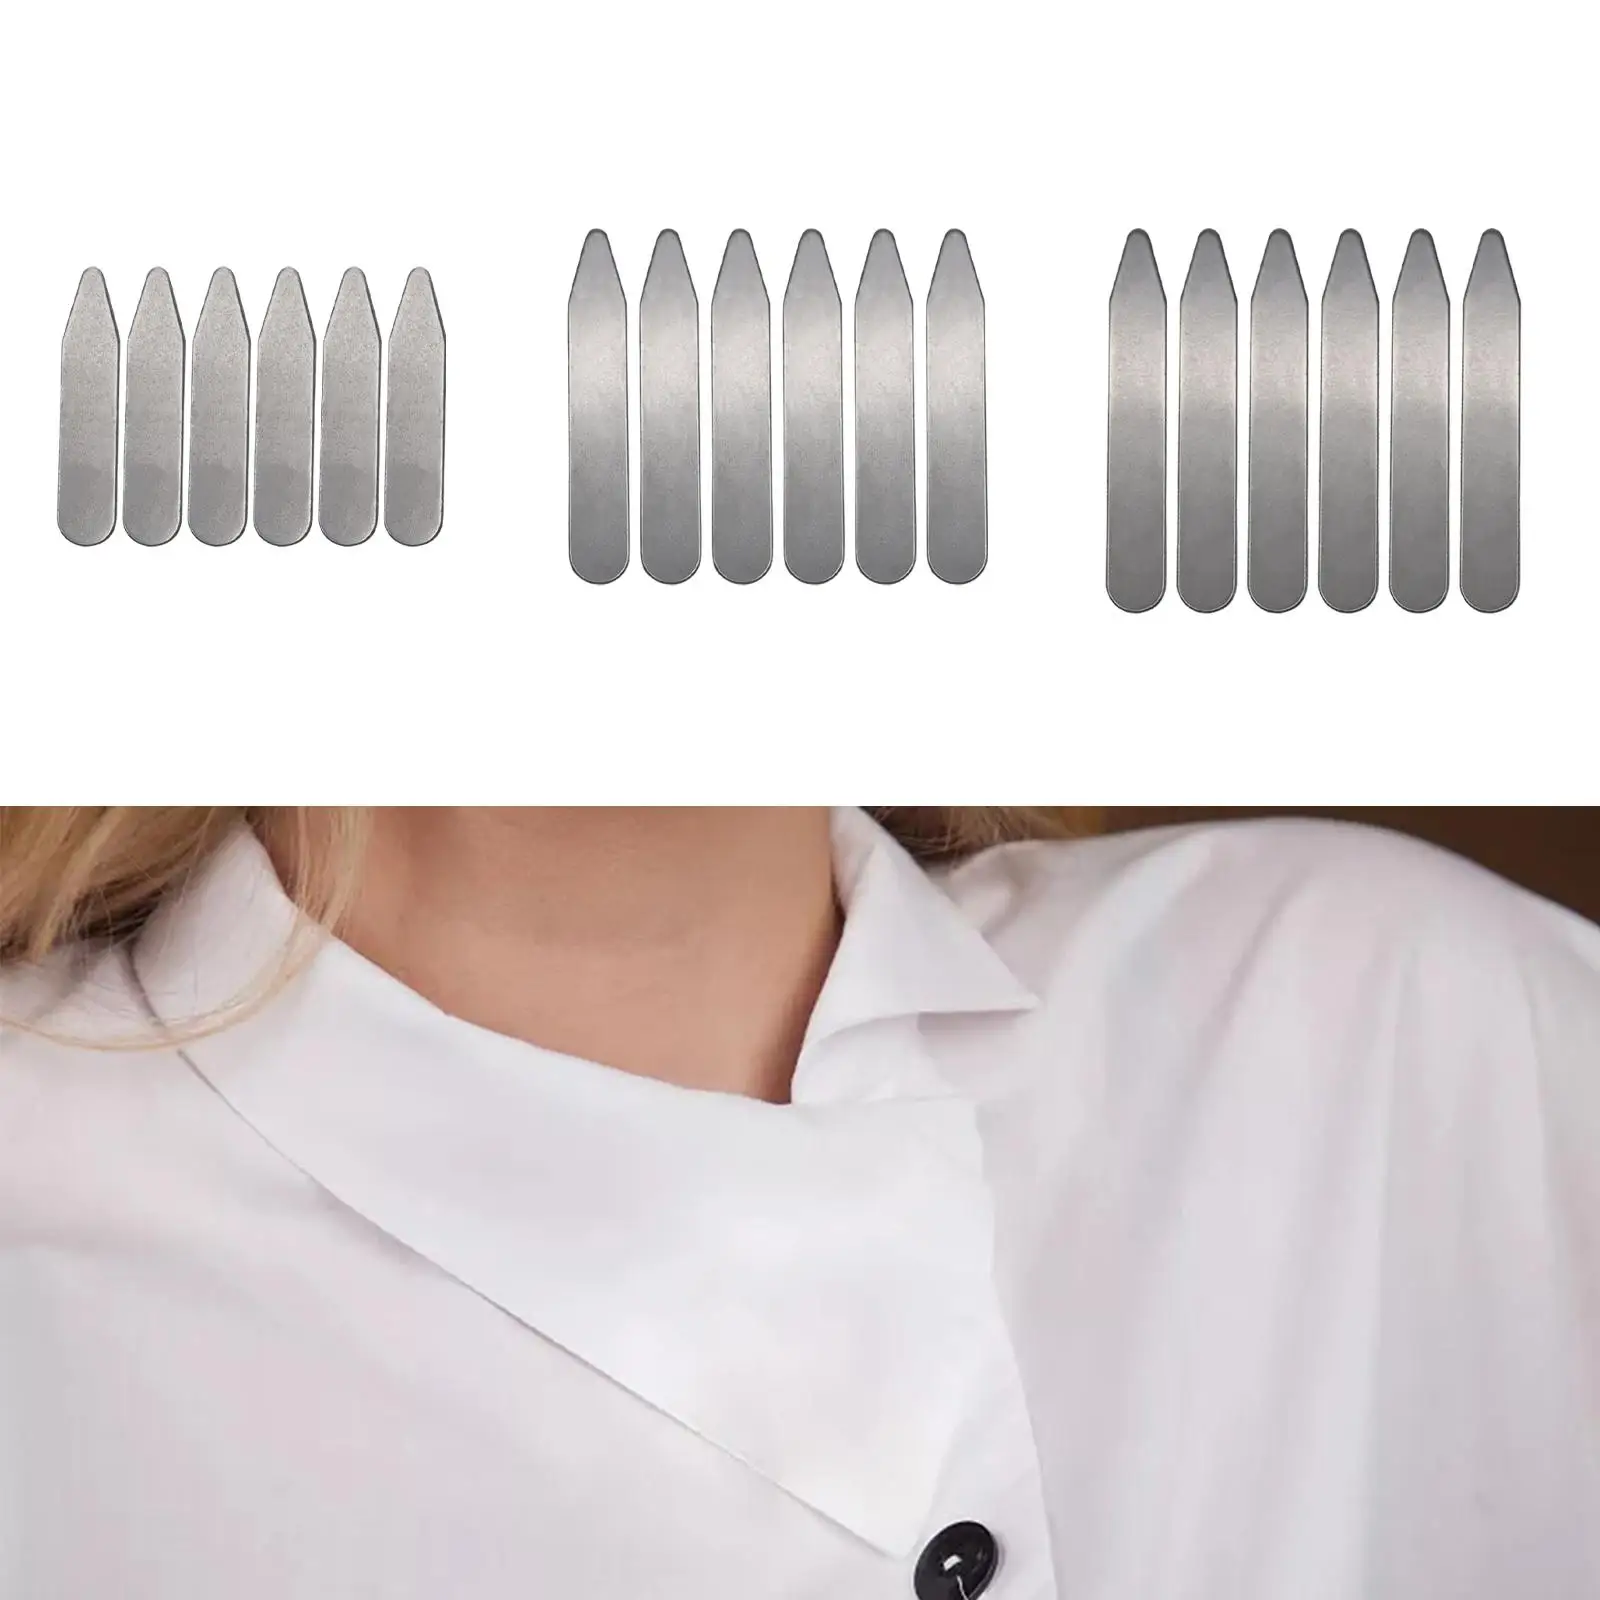 6Pcs Collar Stays Smooth Edges Shirt Collar Inserts Non Slip Metal Unique for Men`s Dress Shirts Women Men Uniform Party Wedding